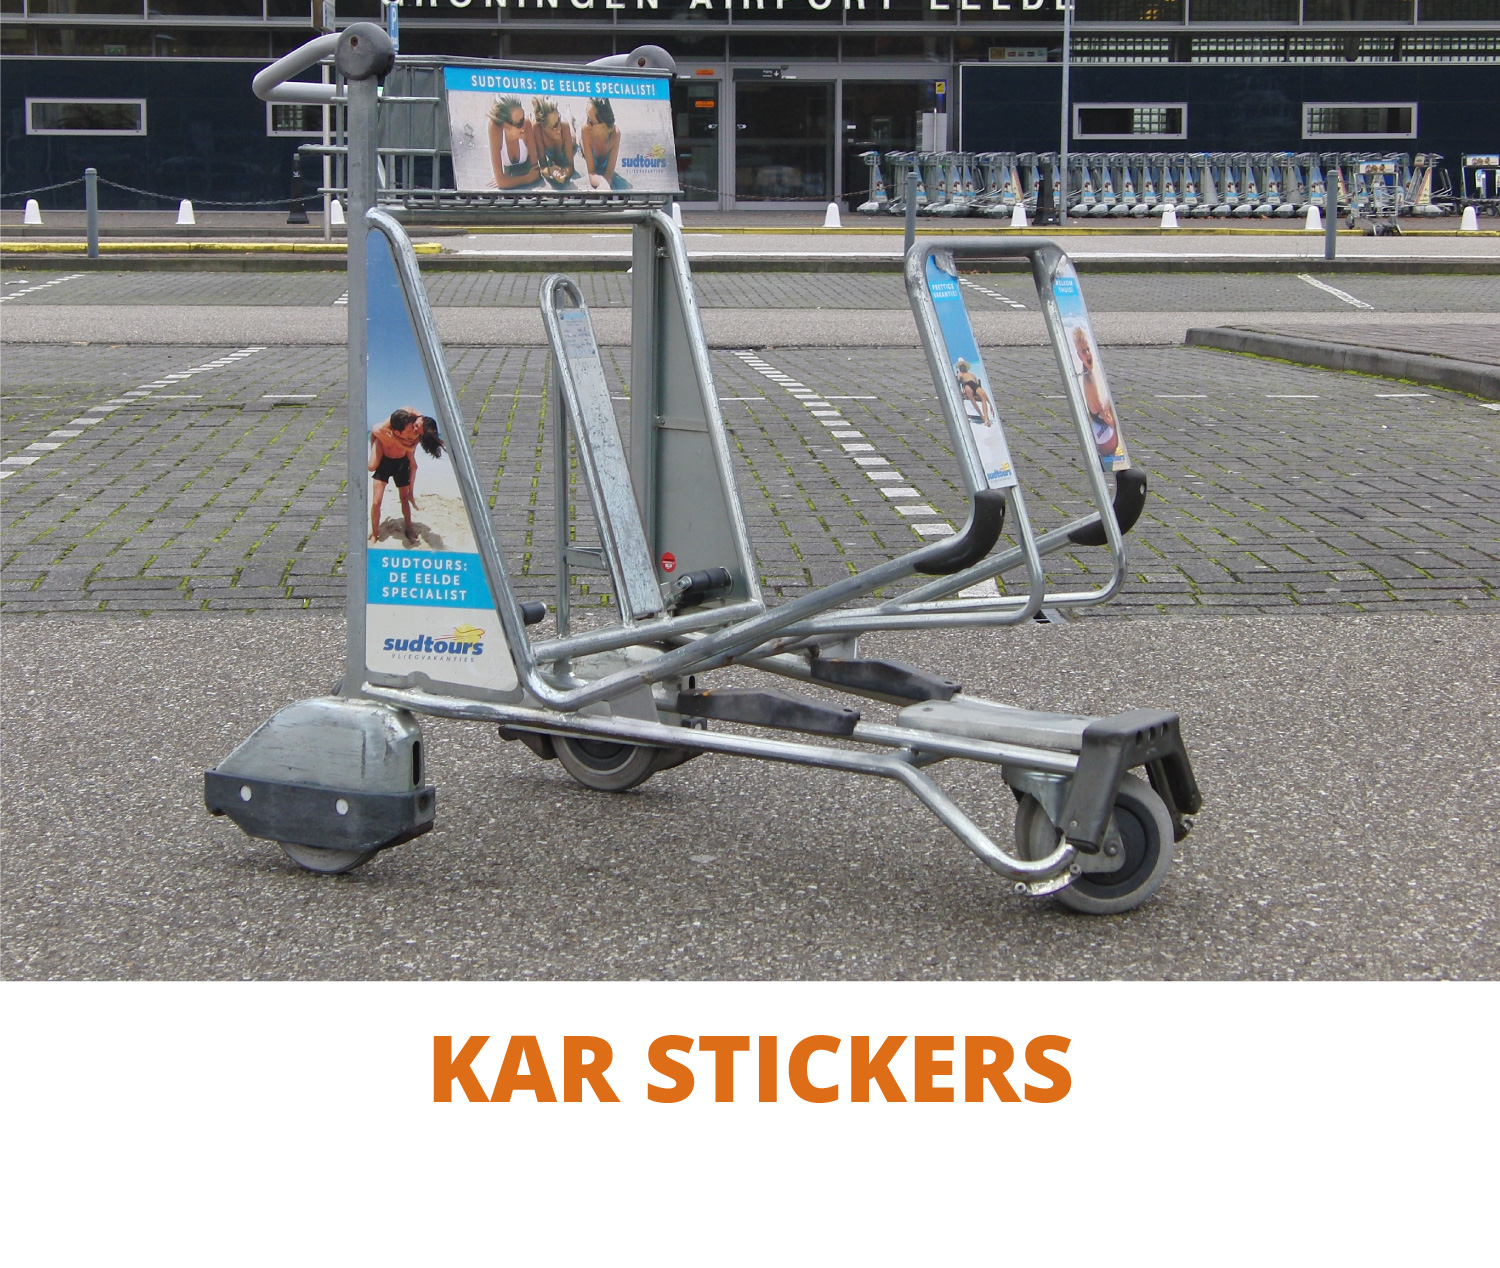 Kar stickers